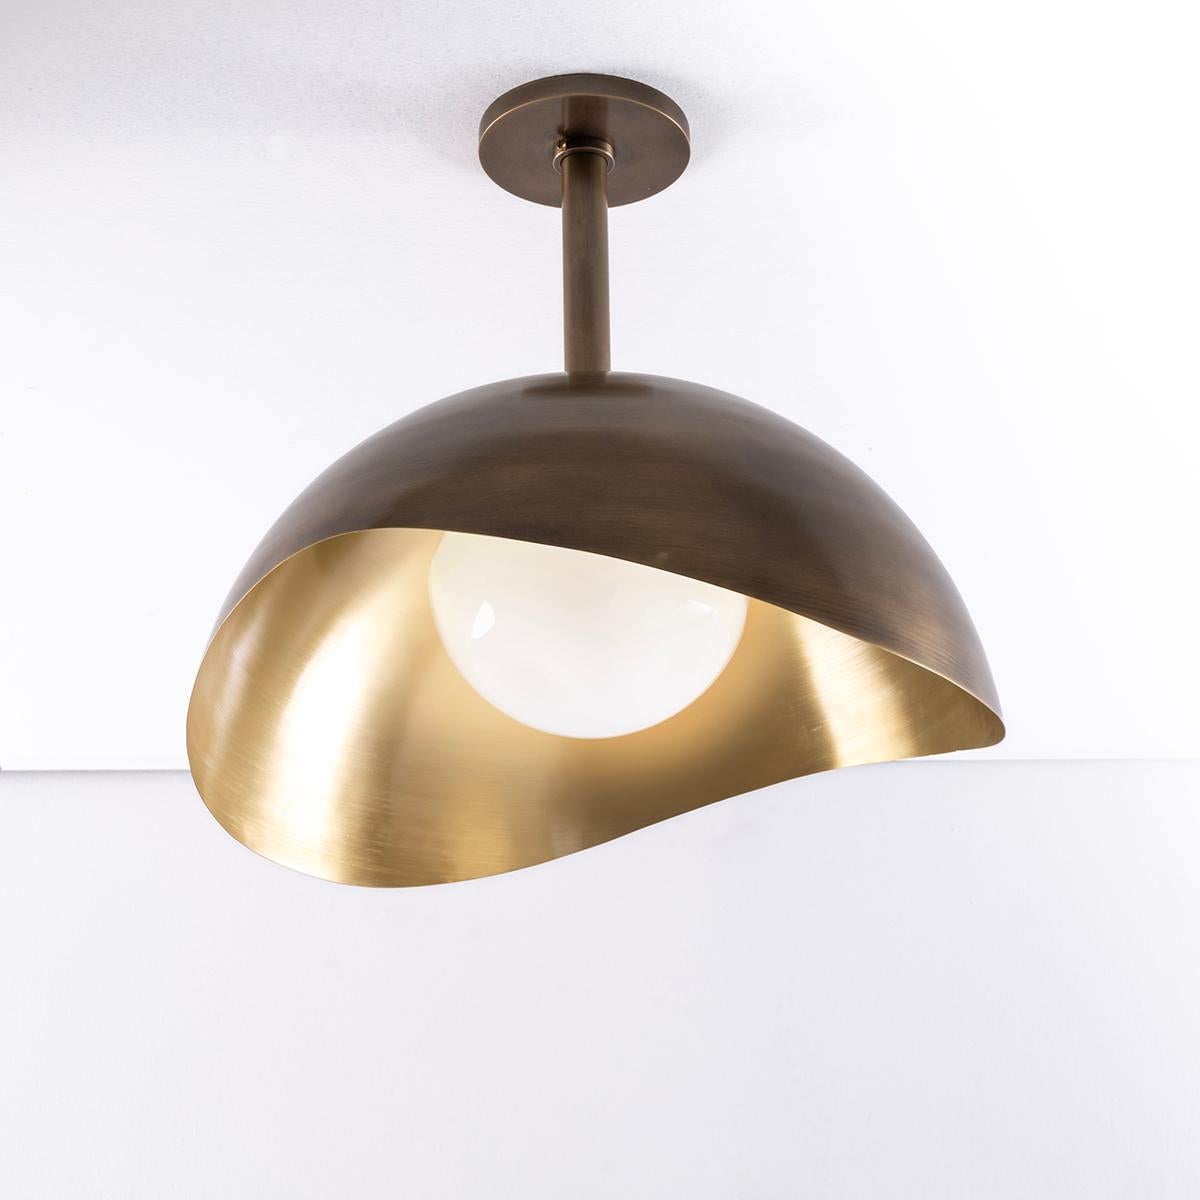 Perla Grande Ceiling Light - Polished Brass Interior and Satin Nickel Exterior For Sale 4